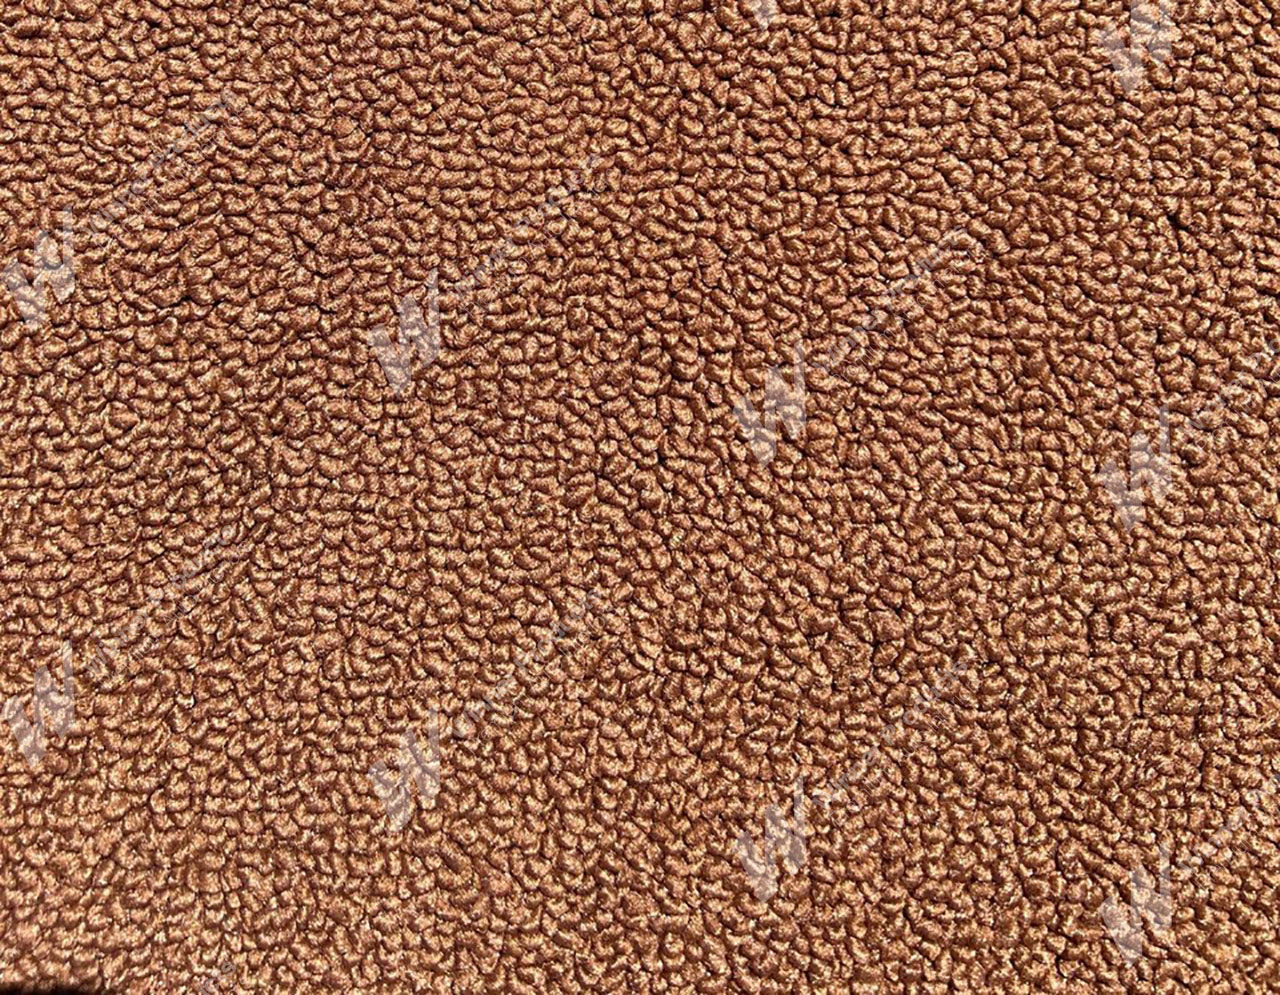 Holden Kingswood HX Kingswood Panel Van 67V Tan Carpet (Image 1 of 1)